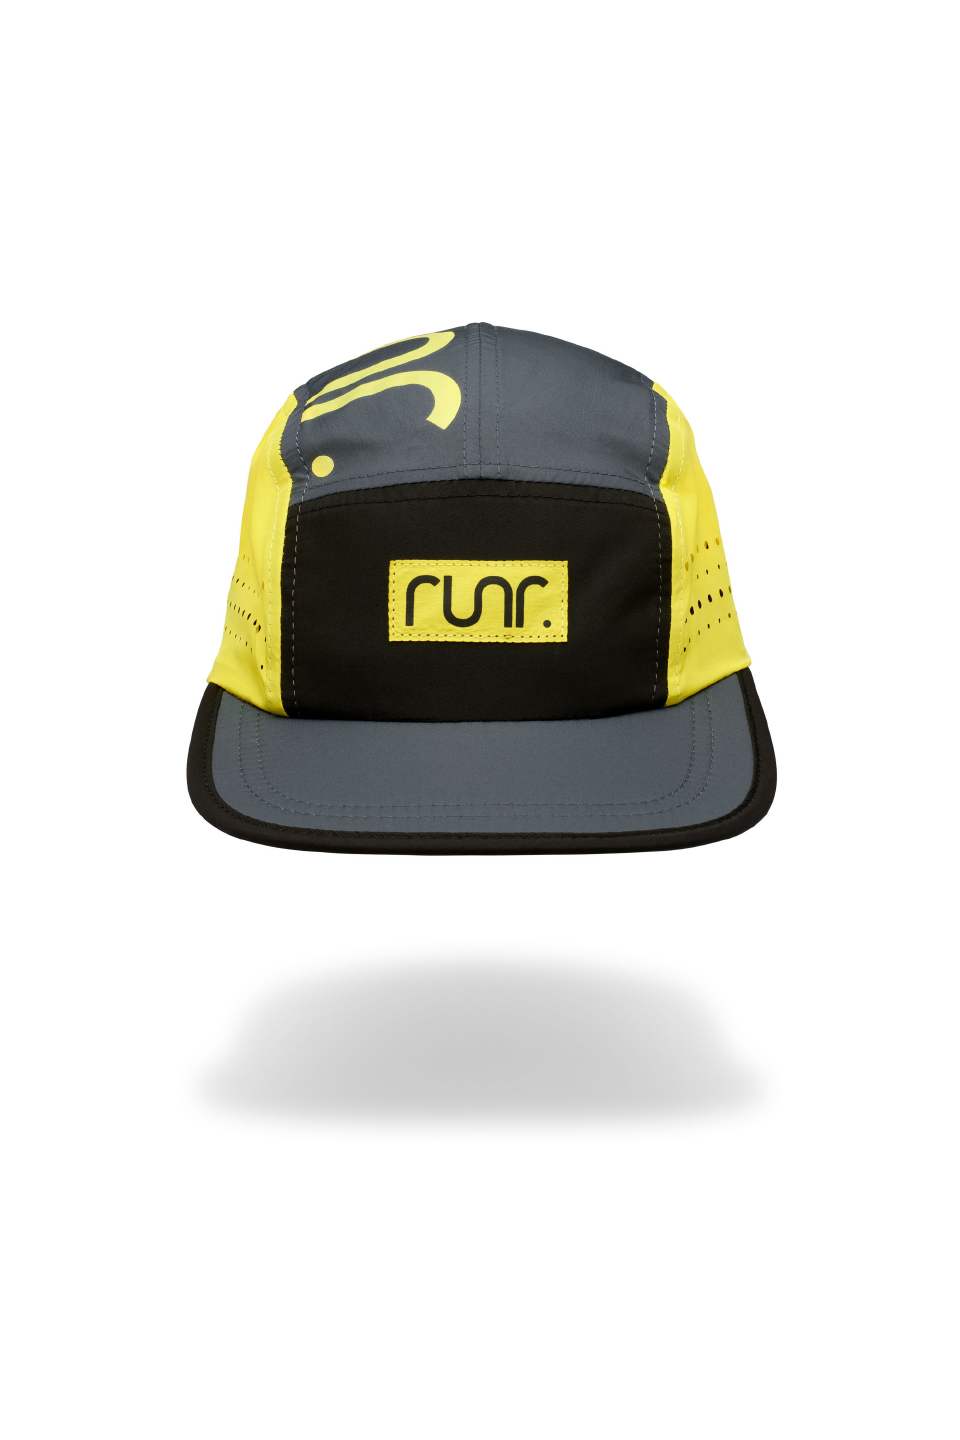 Runr Seoul Technical Running Hat